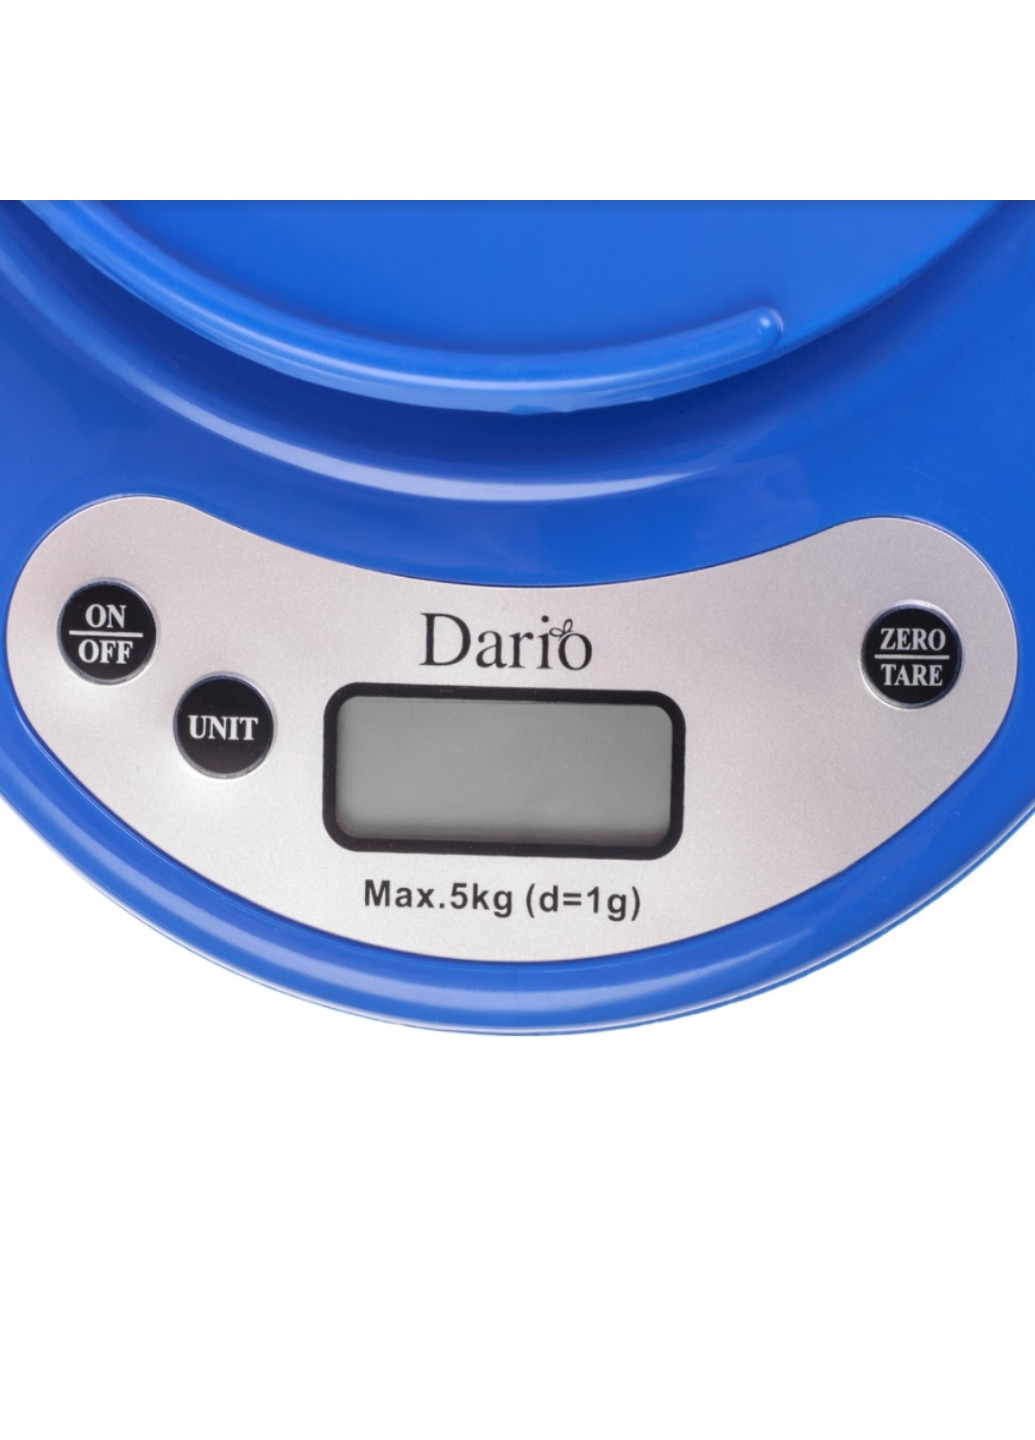 Ваги кухонні з чашею DKS-505С до 5 кг Dario dks-505с_blue (229082967)